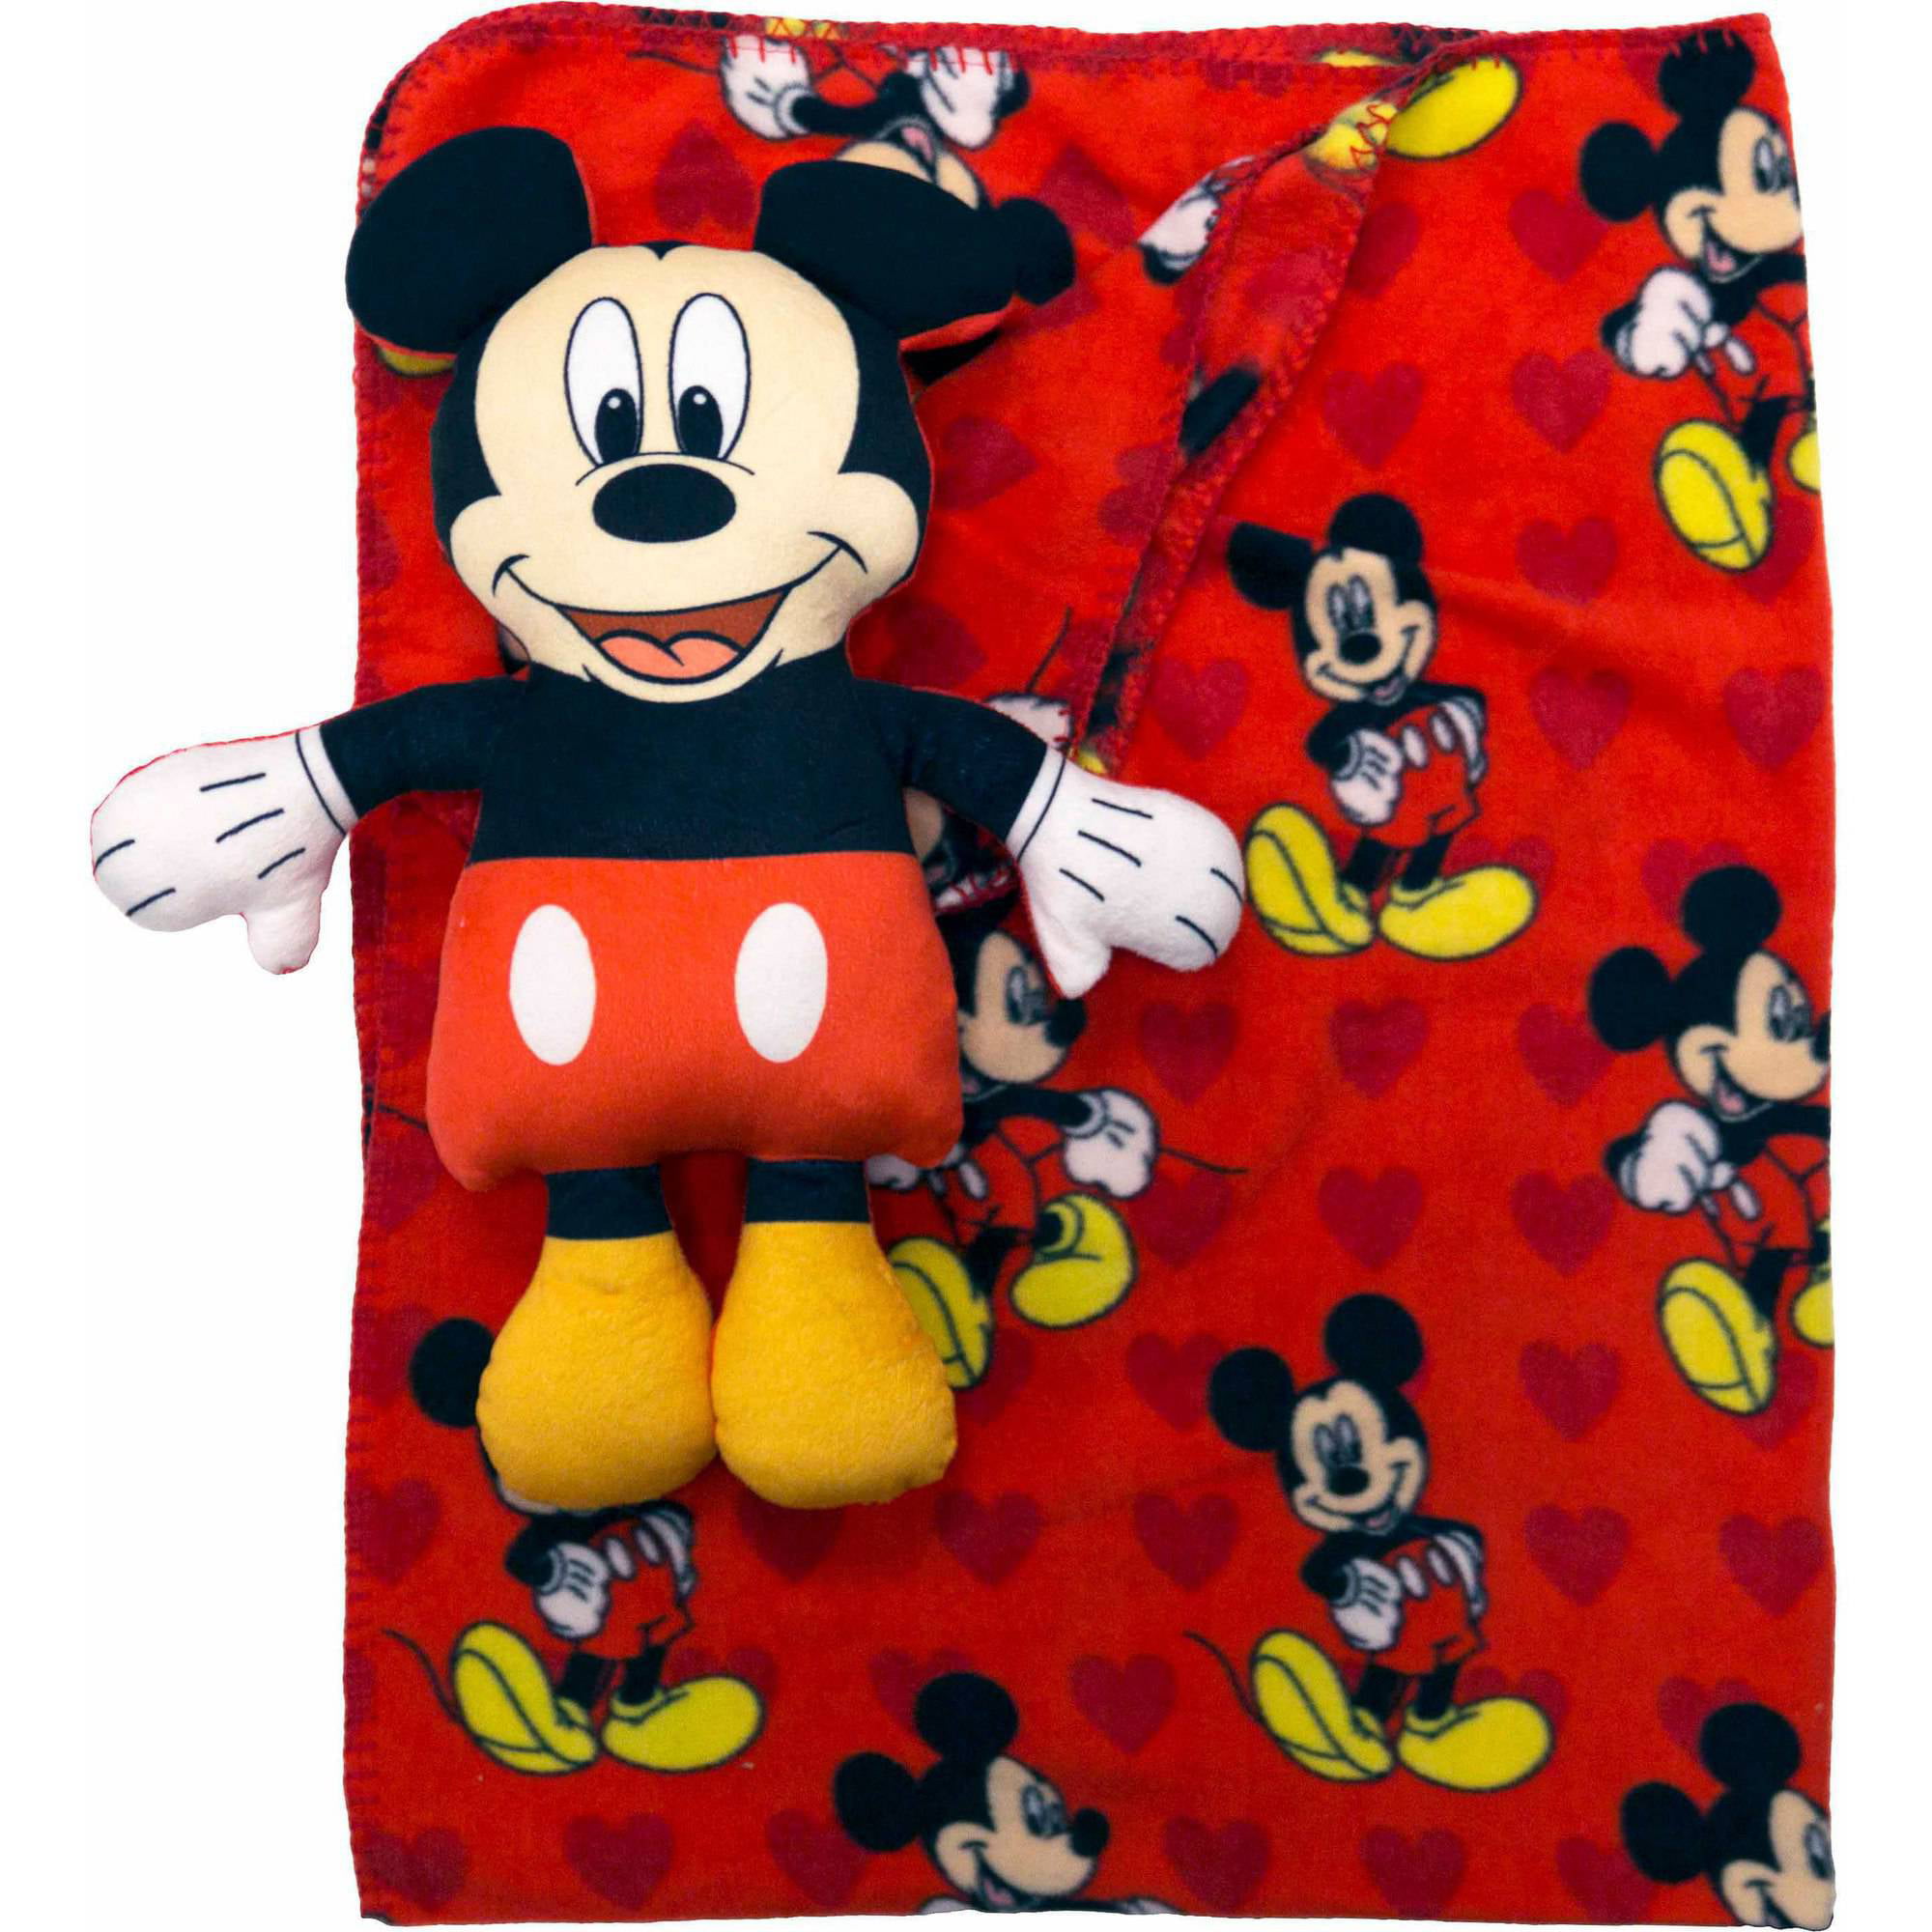 Disney Mickey Mouse Character Pillow And Throw Set Walmartcom Walmartcom